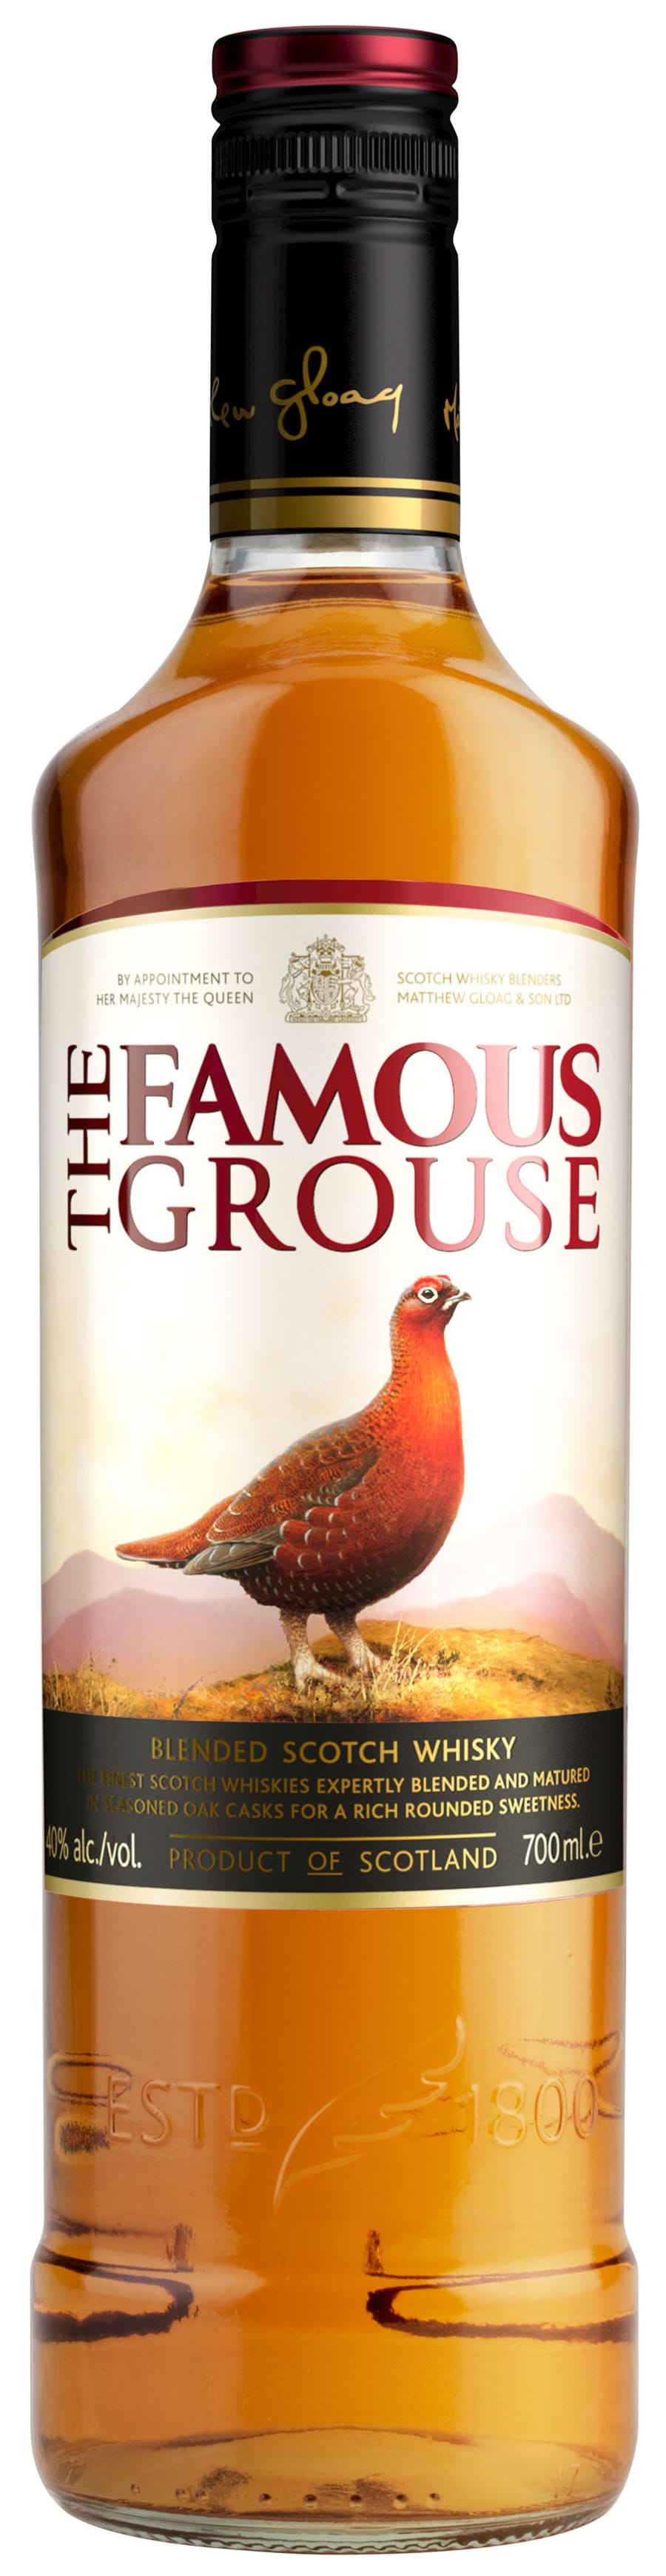 the-famous-grouse.jpg